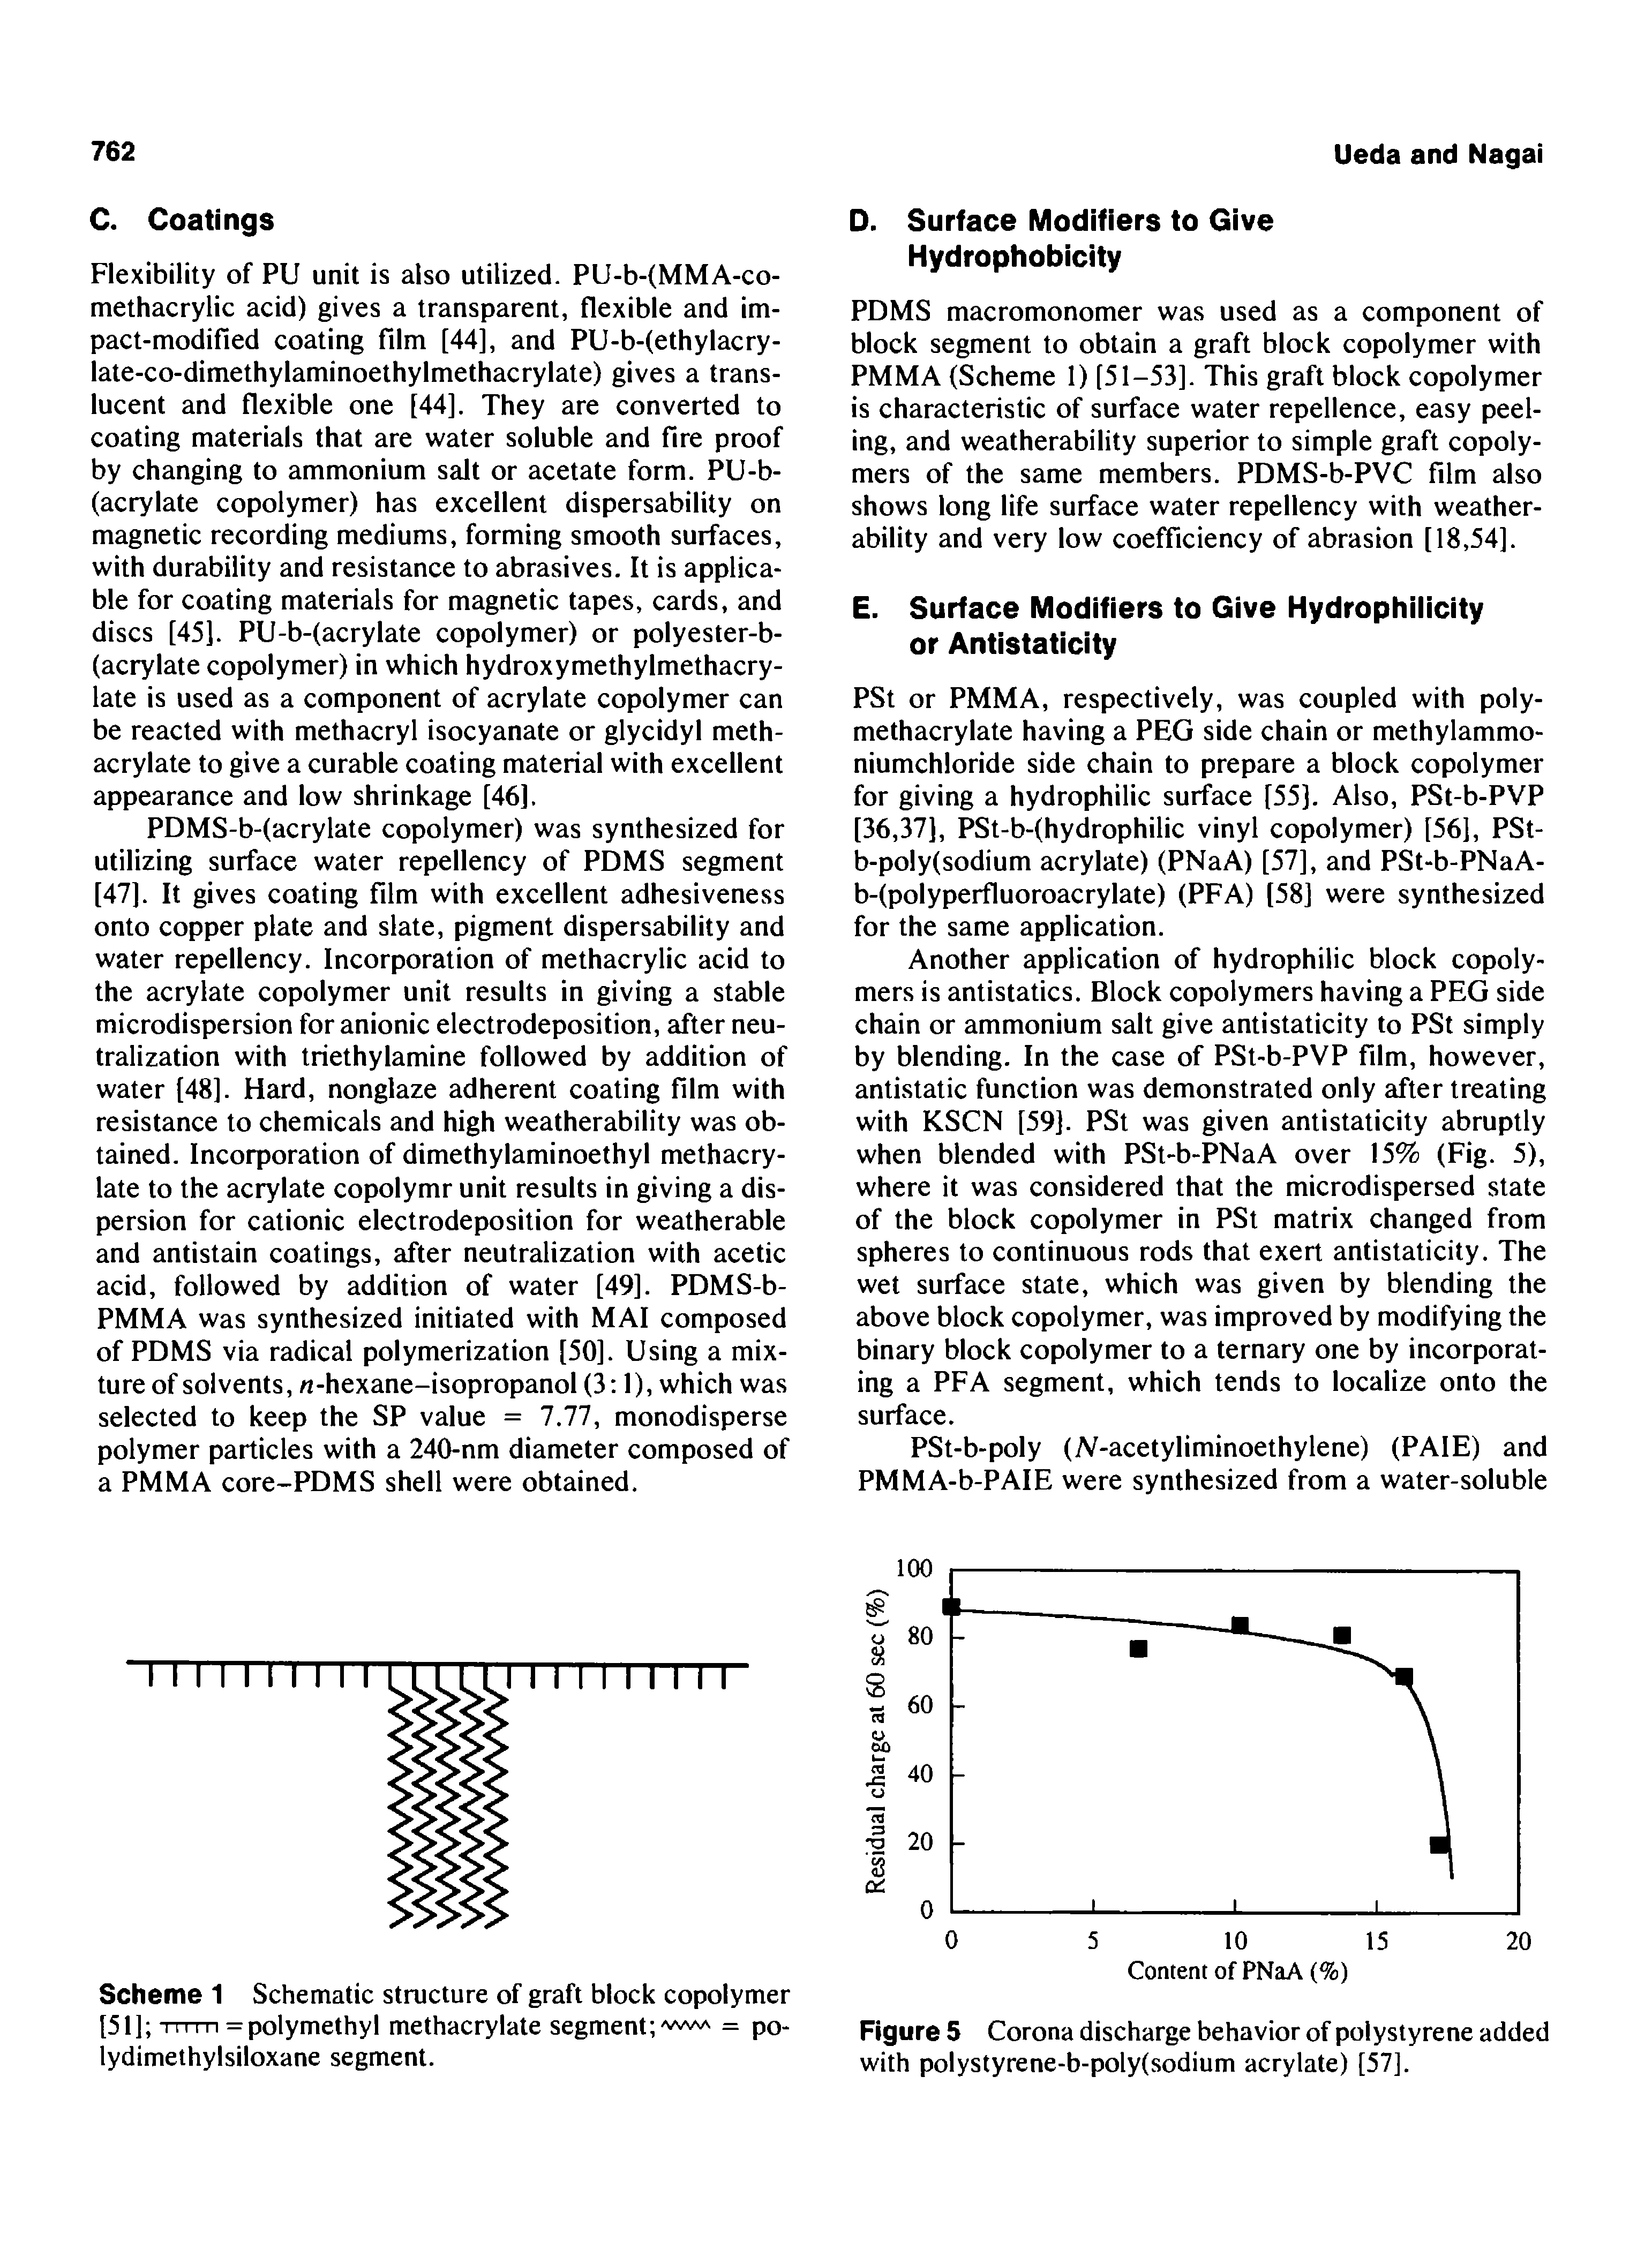 Figure 5 Corona discharge behavior of polystyrene added with polystyrene-b-poly(sodium acrylate) [57].